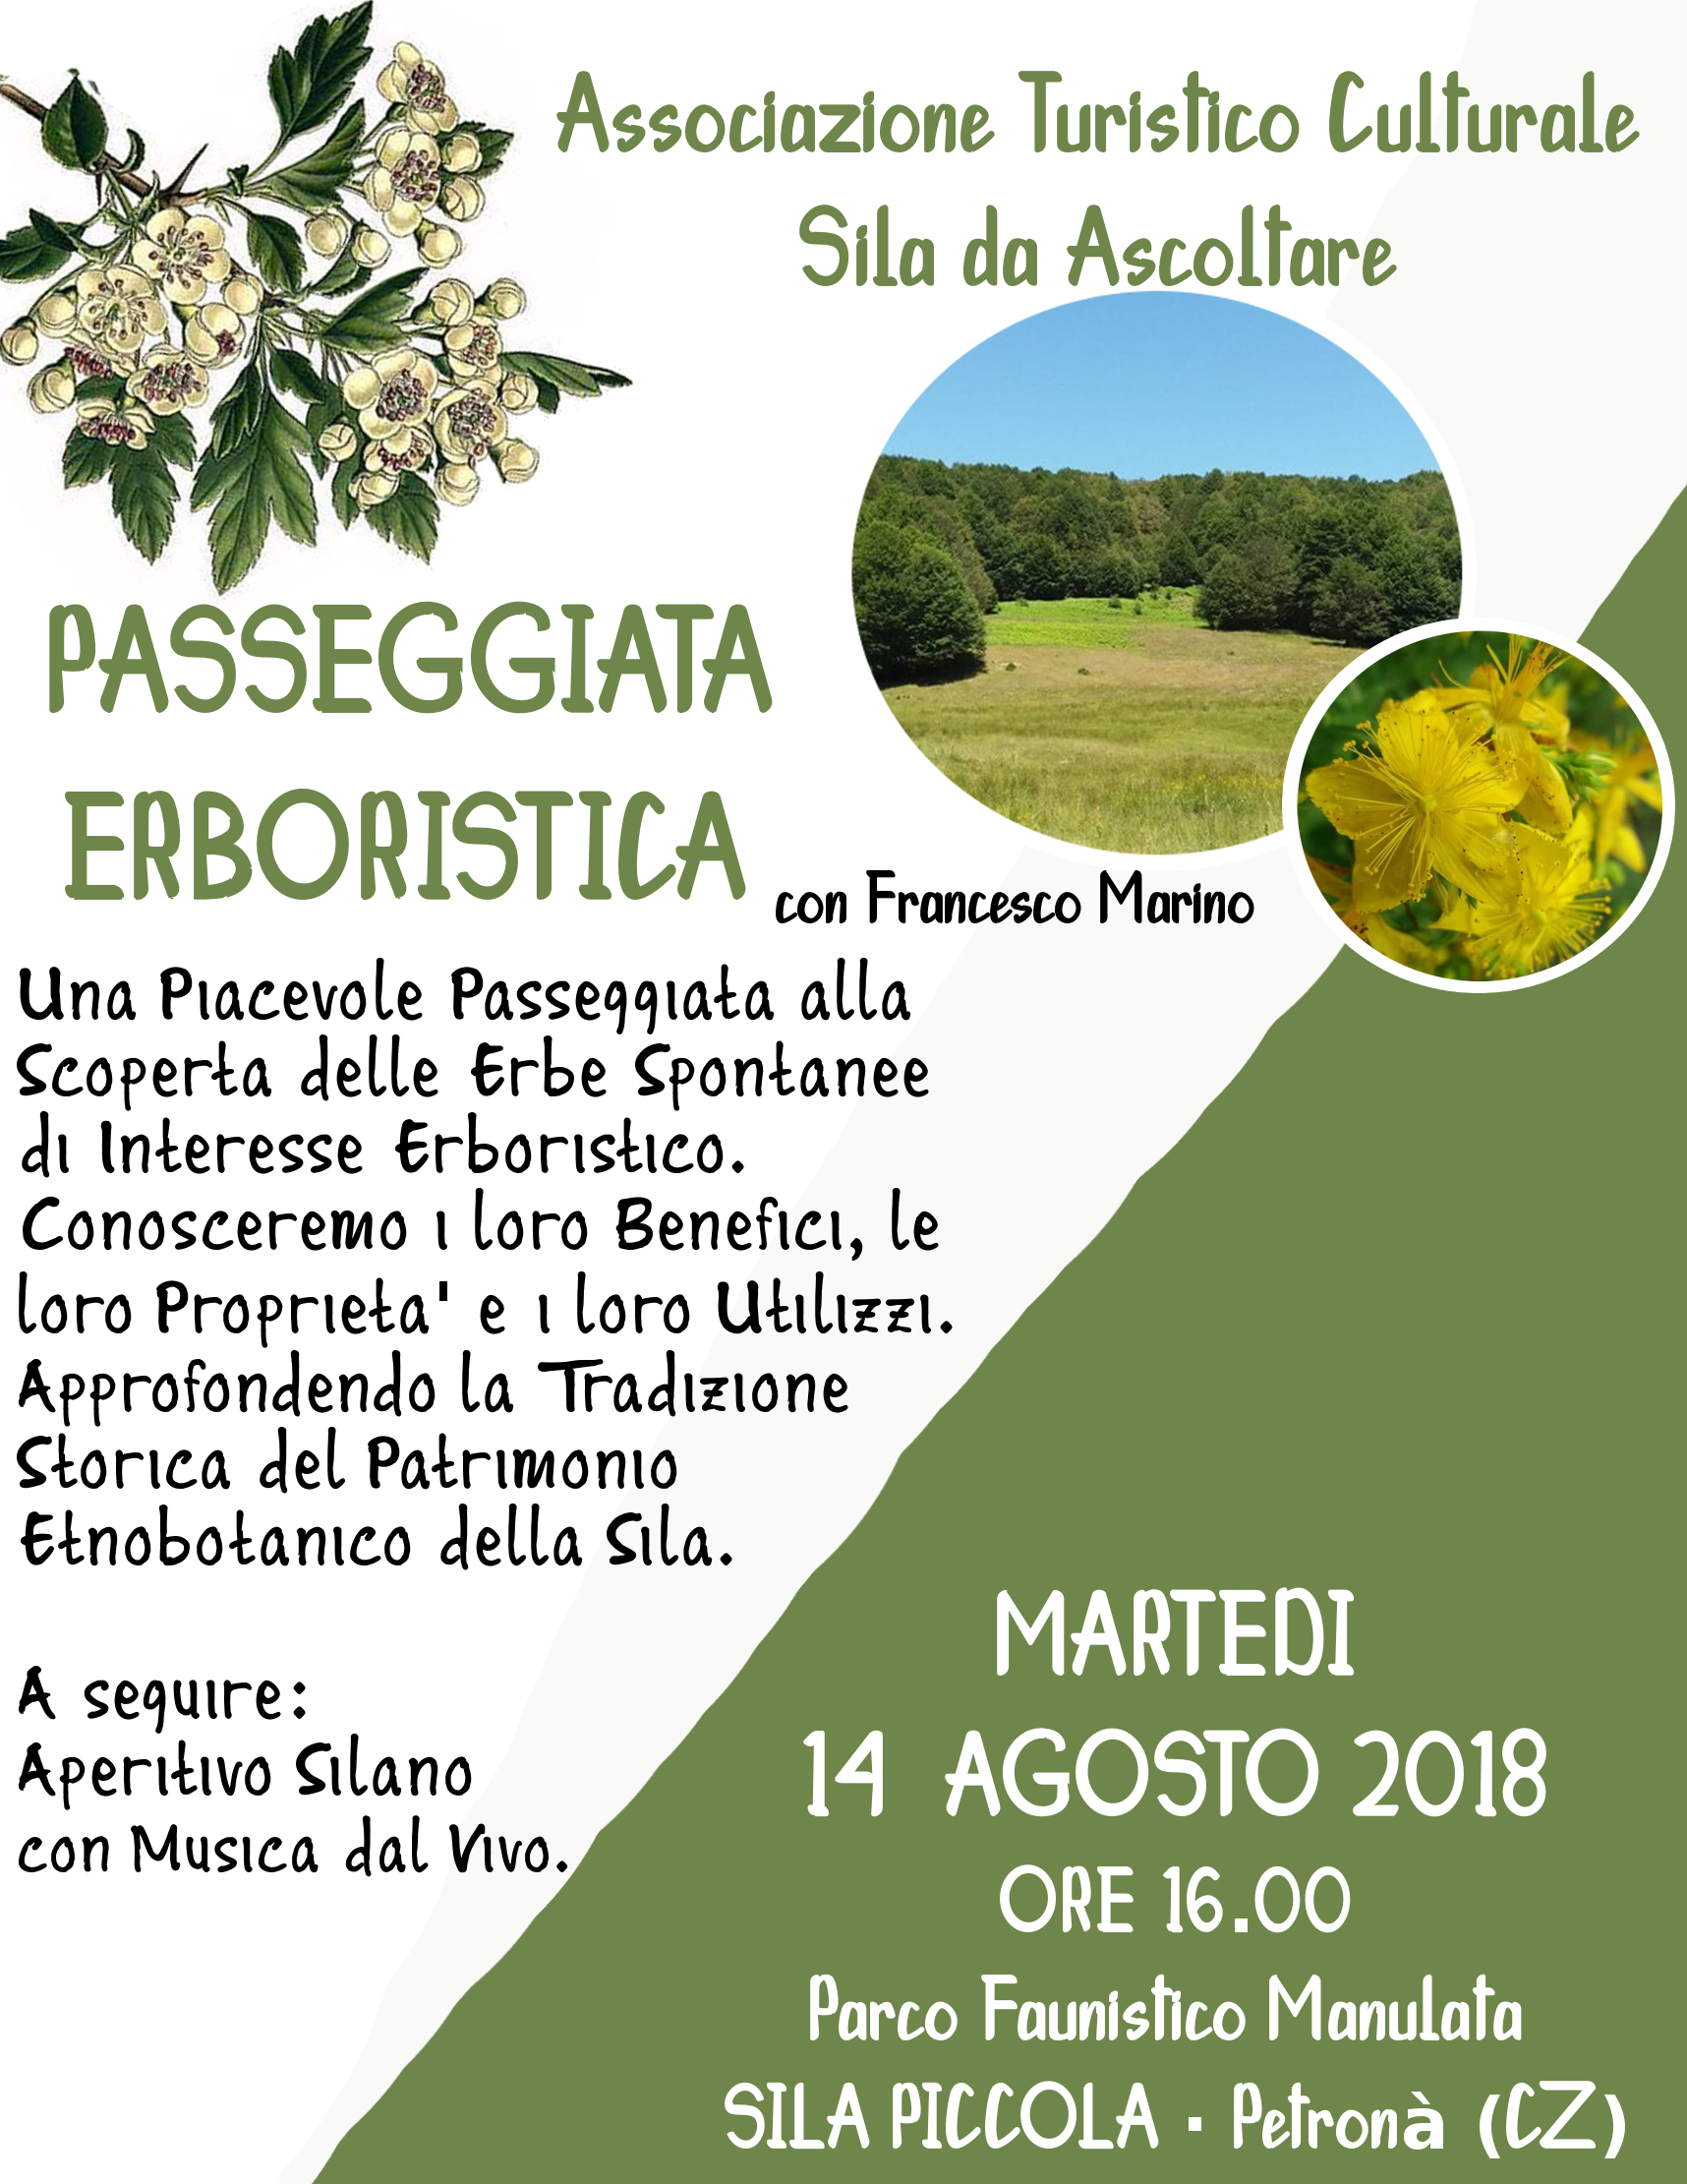 Passeggiata erboristica - Dott. Francesco Marino